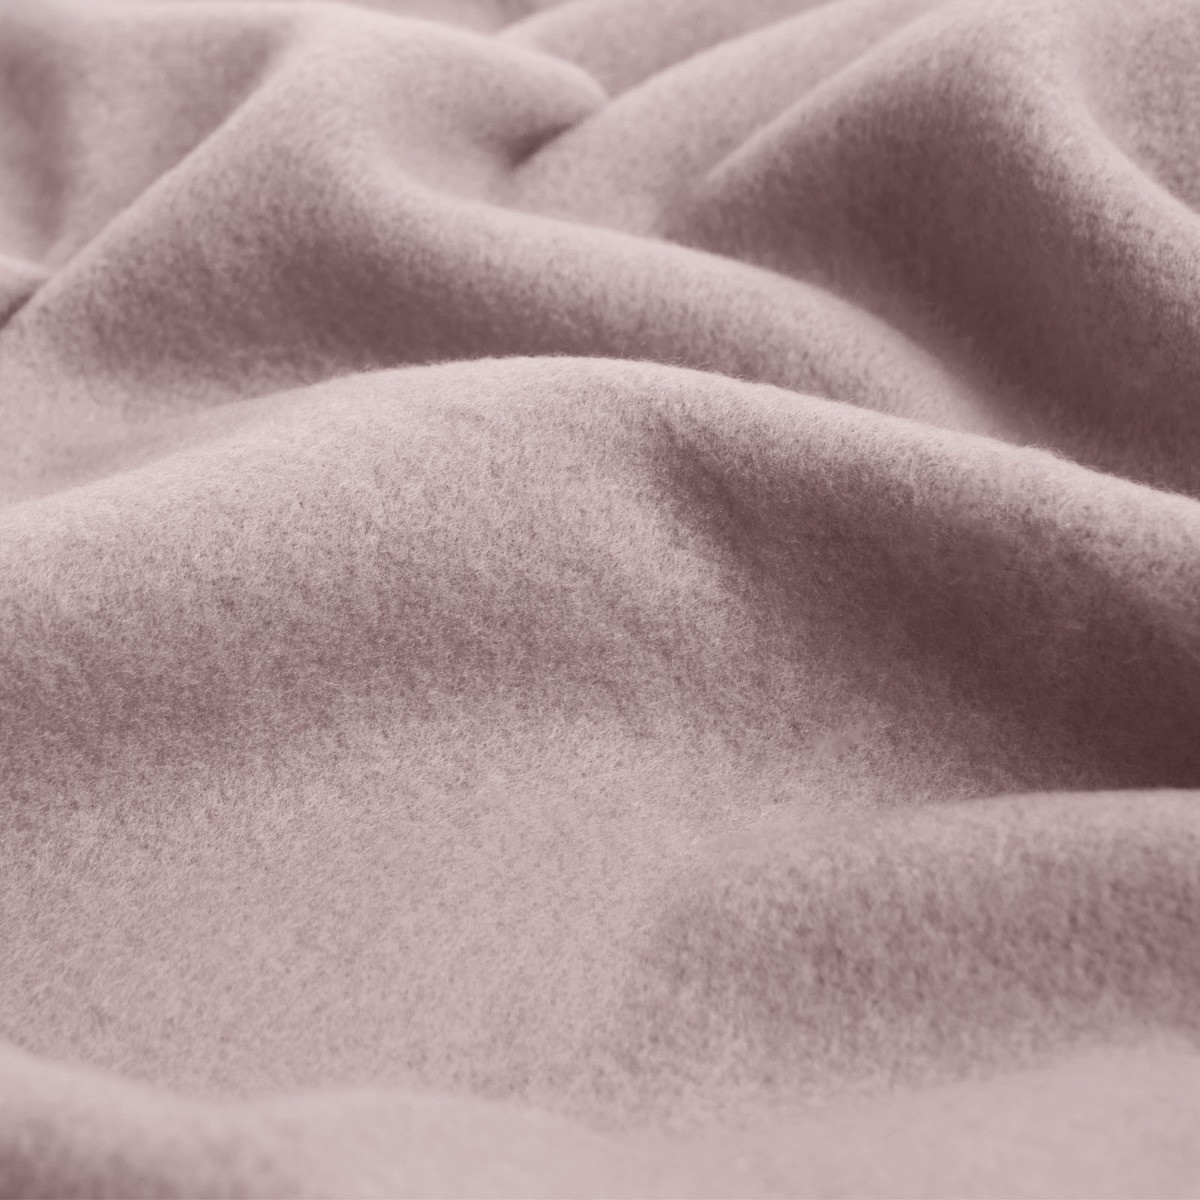 Dreamscene Plain Fleece Throw, Blush Pink - 120 x 150 cm>